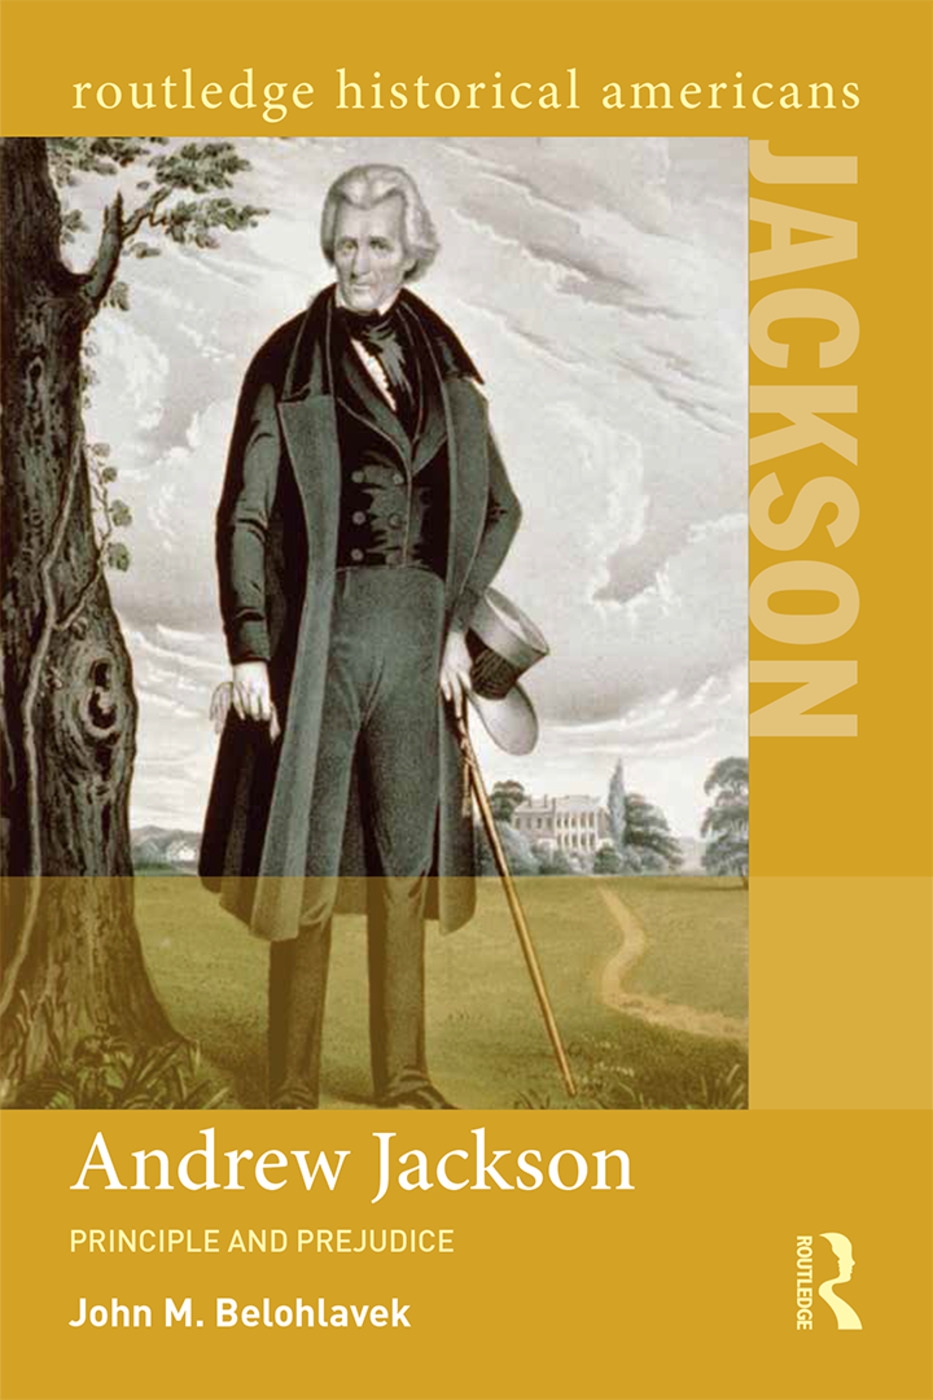 Andrew Jackson: Principle and Prejudice